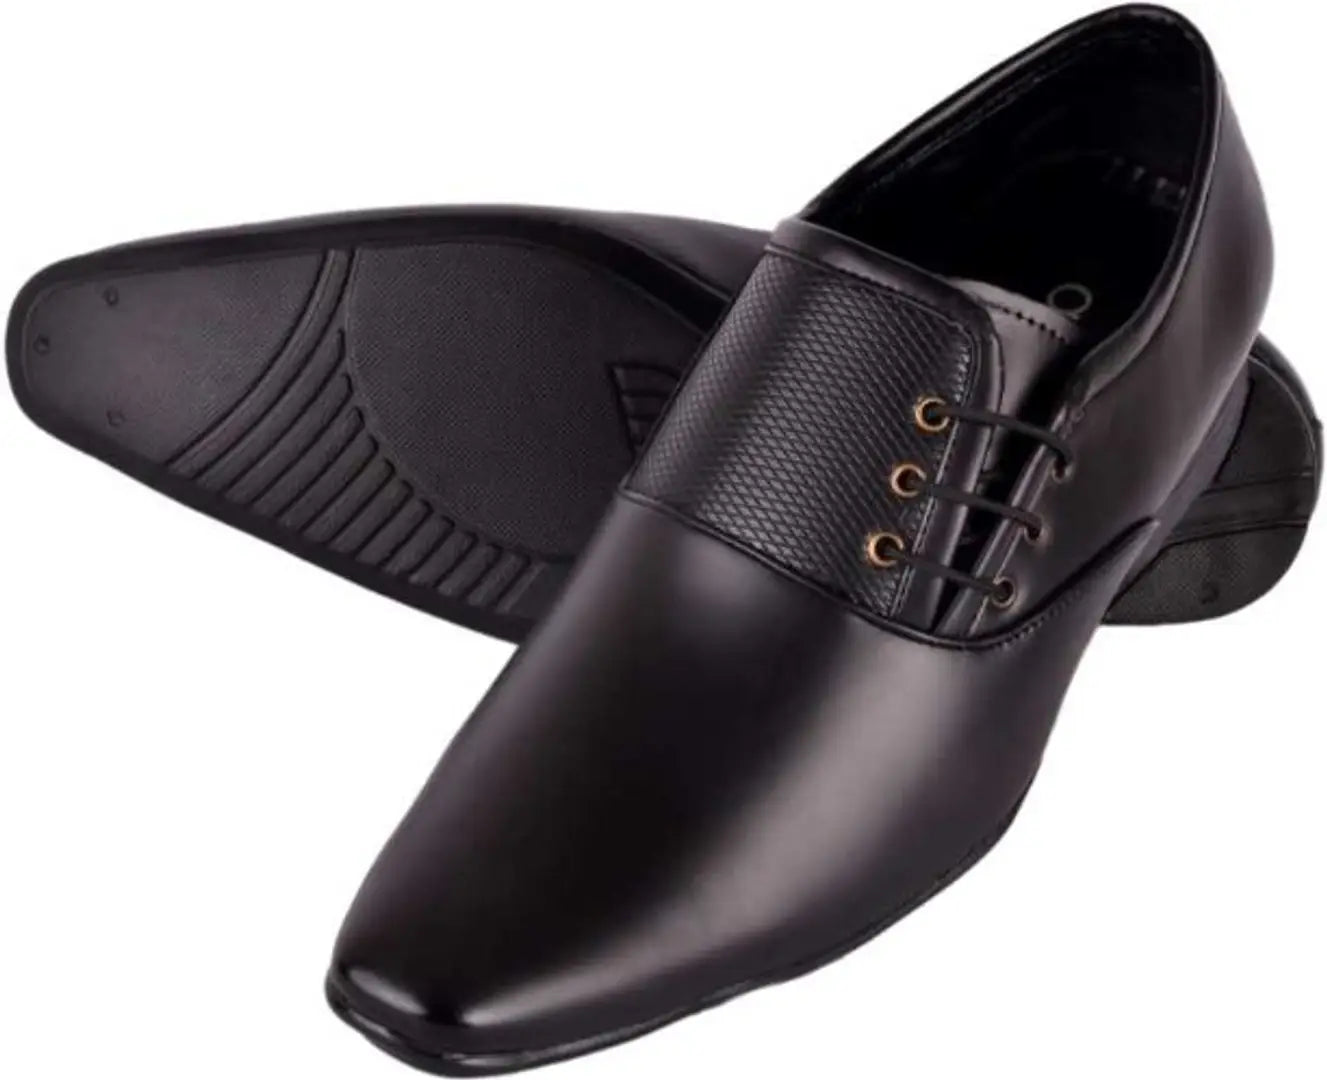 Black Shoes, Formal Shoes, Official Shoes for Men